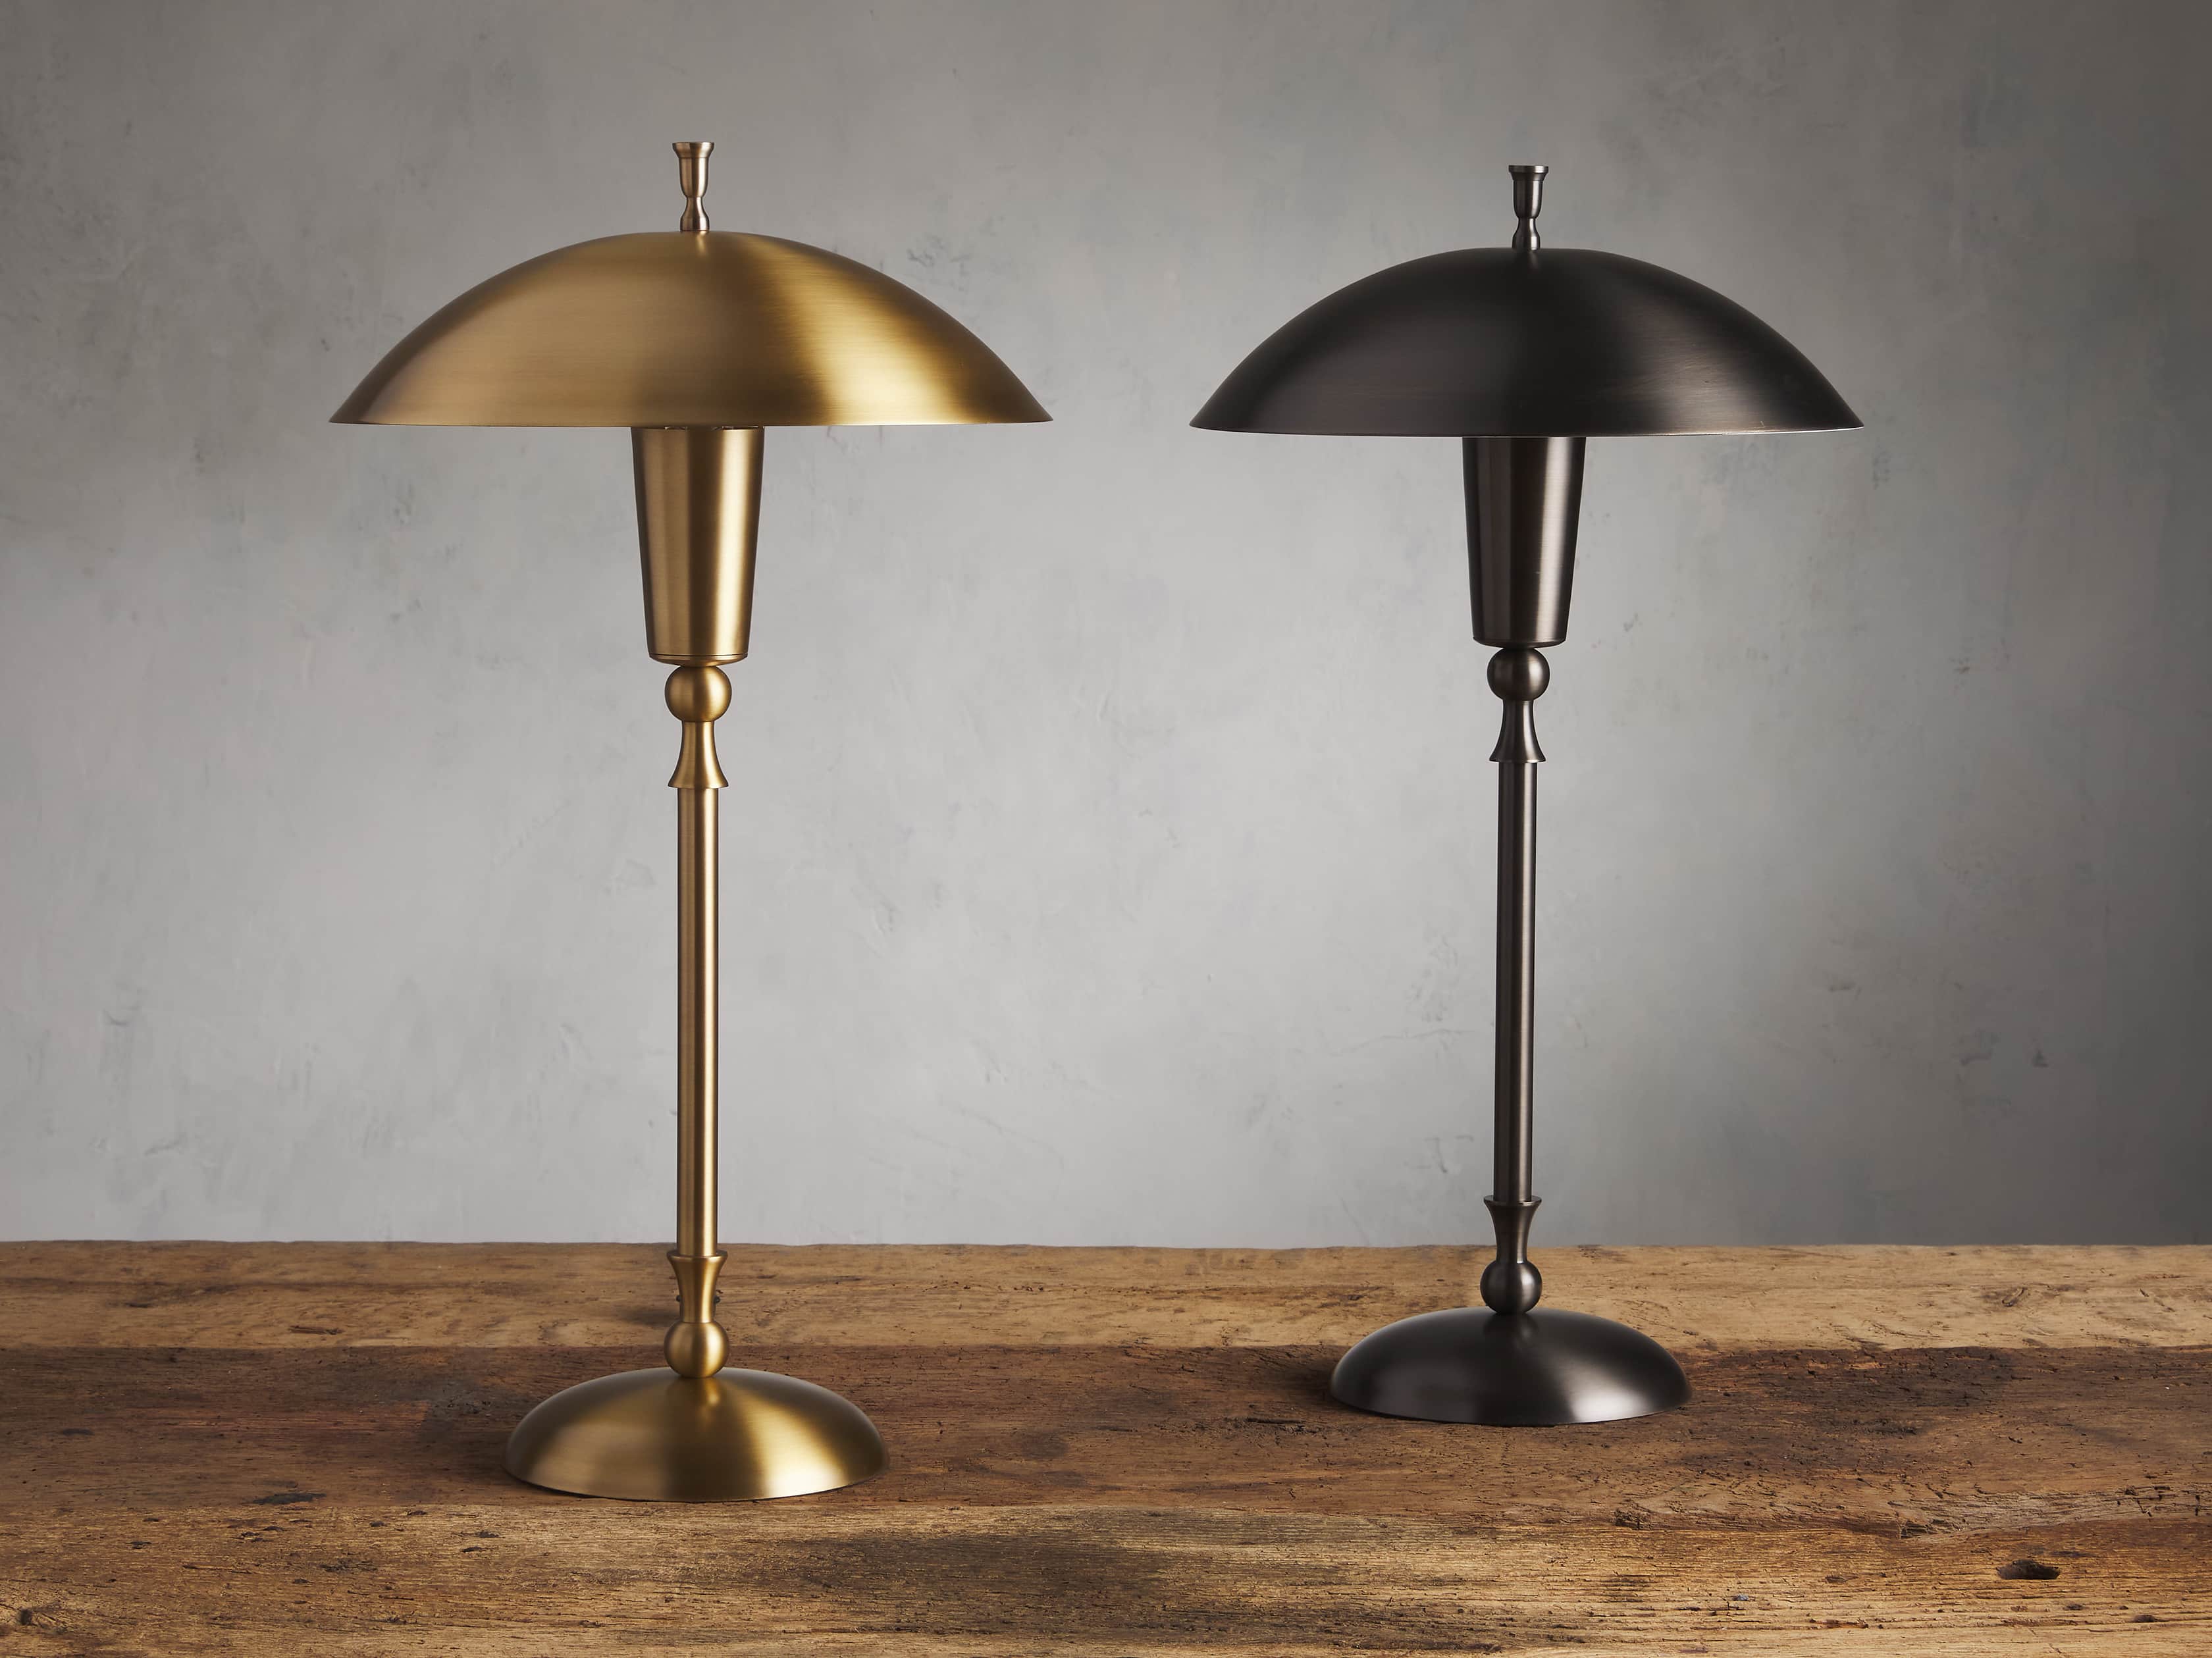 Archard Bronze Table Lamp Arhaus, Art Nouveau Table Lamp History Pdf